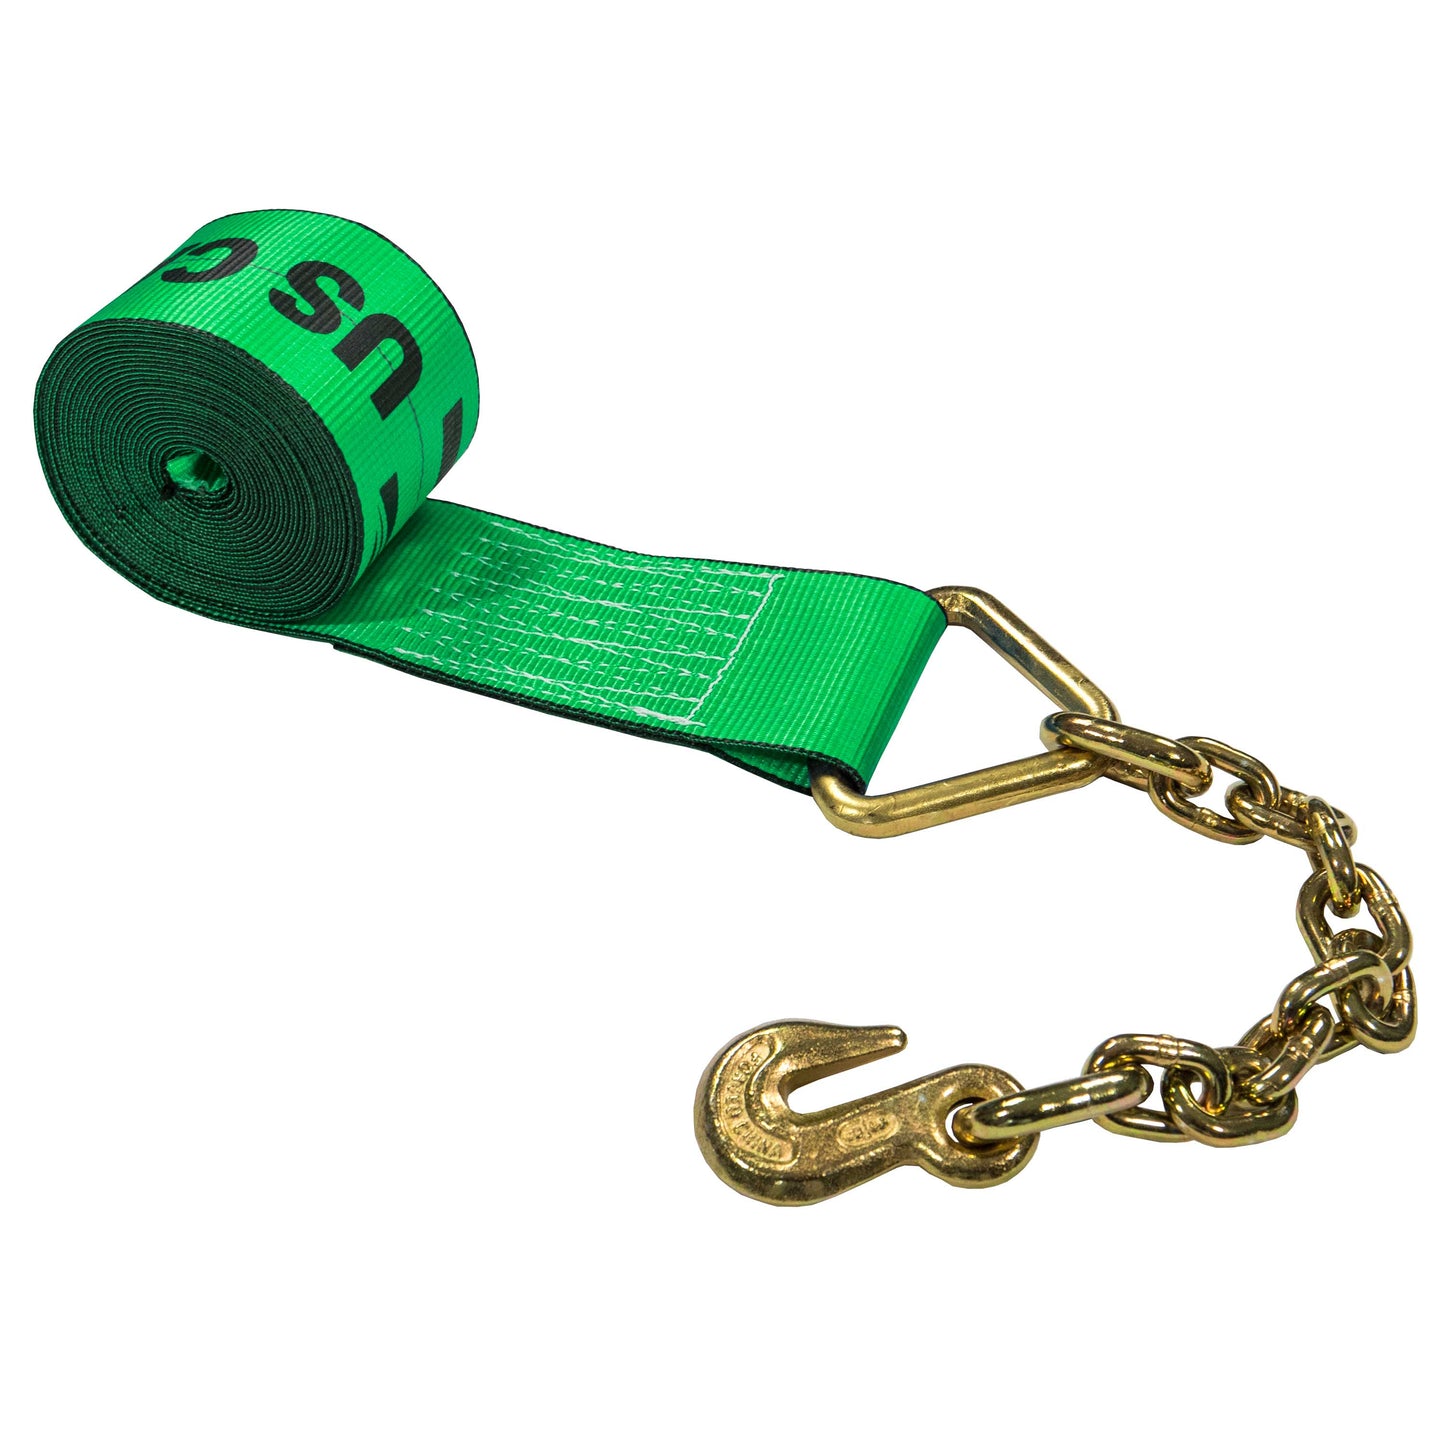 27' 4" heavy-duty green chain extension winch strap